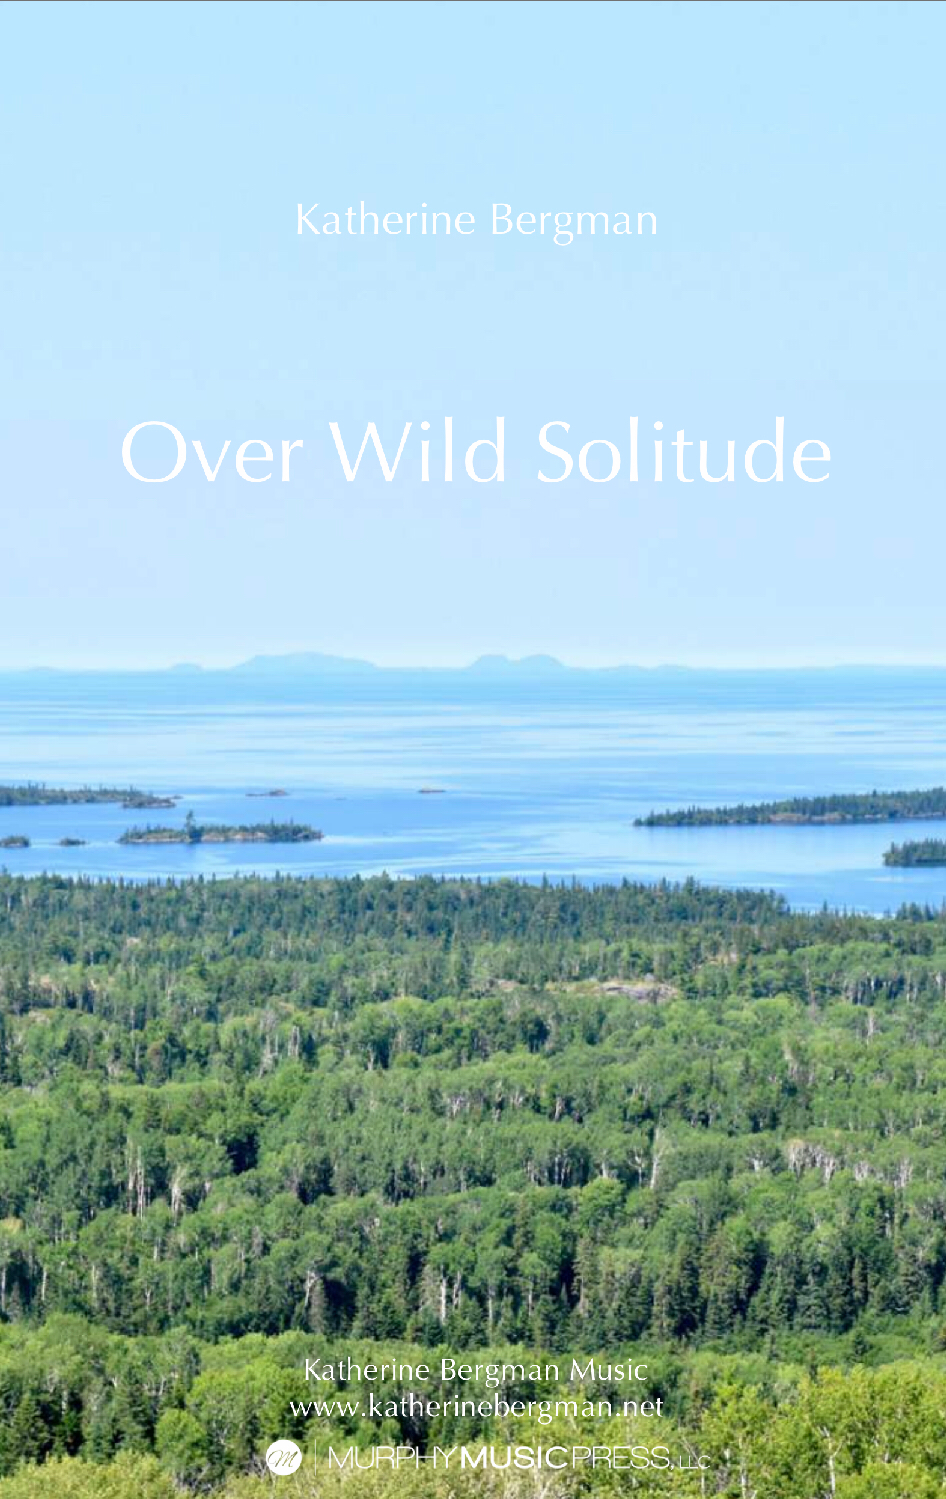 Over Wild Solitude (Score Only) by Katherine Bergman